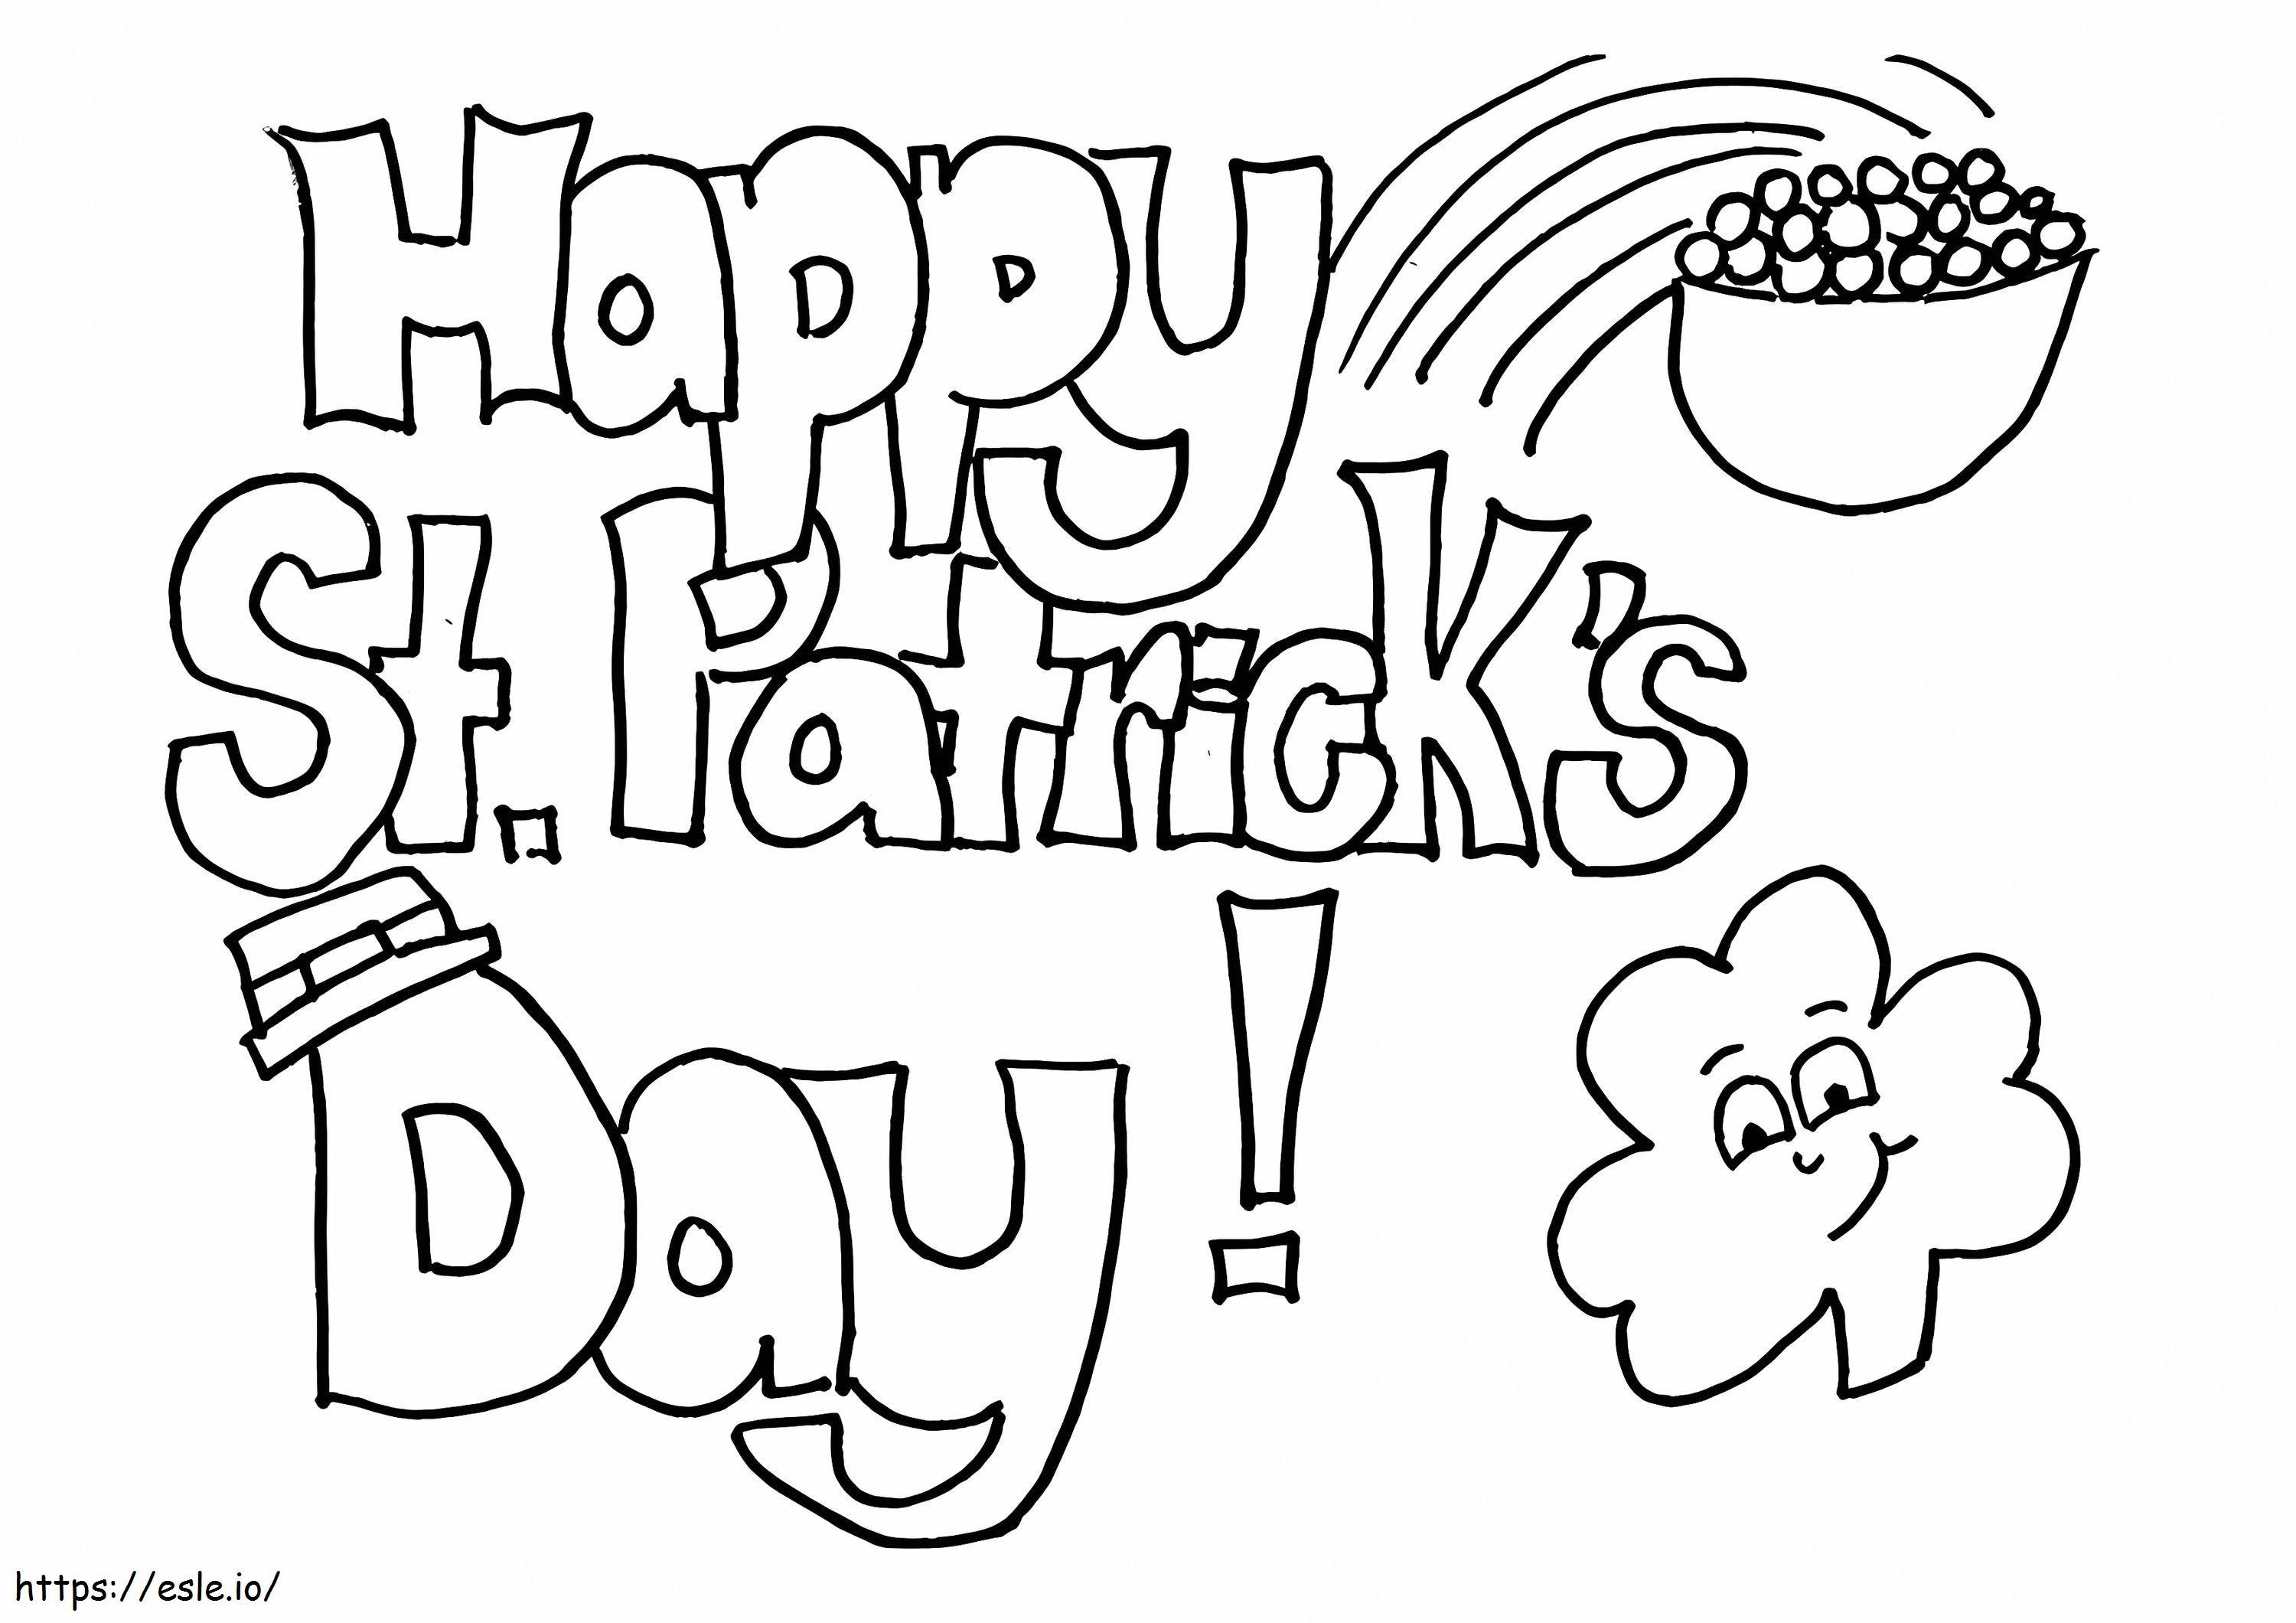  Der Happy St. Patrick S Day A4 E1600442906495 ausmalbilder